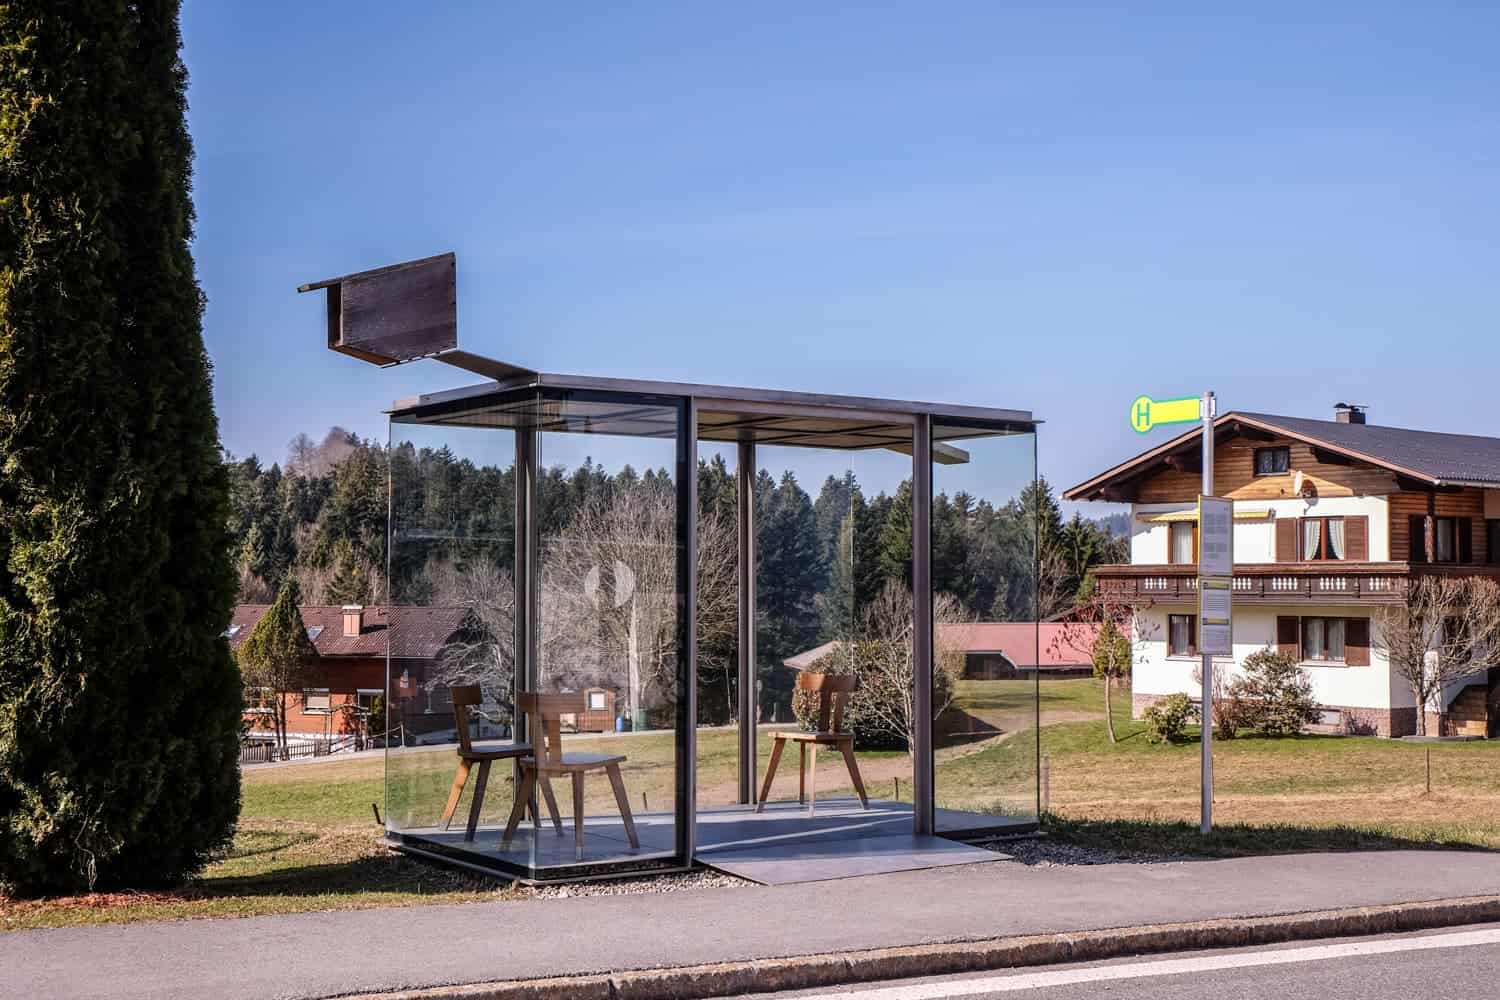 One of the unique seven bus stops in Krumbach, Vorarlberg, Austria